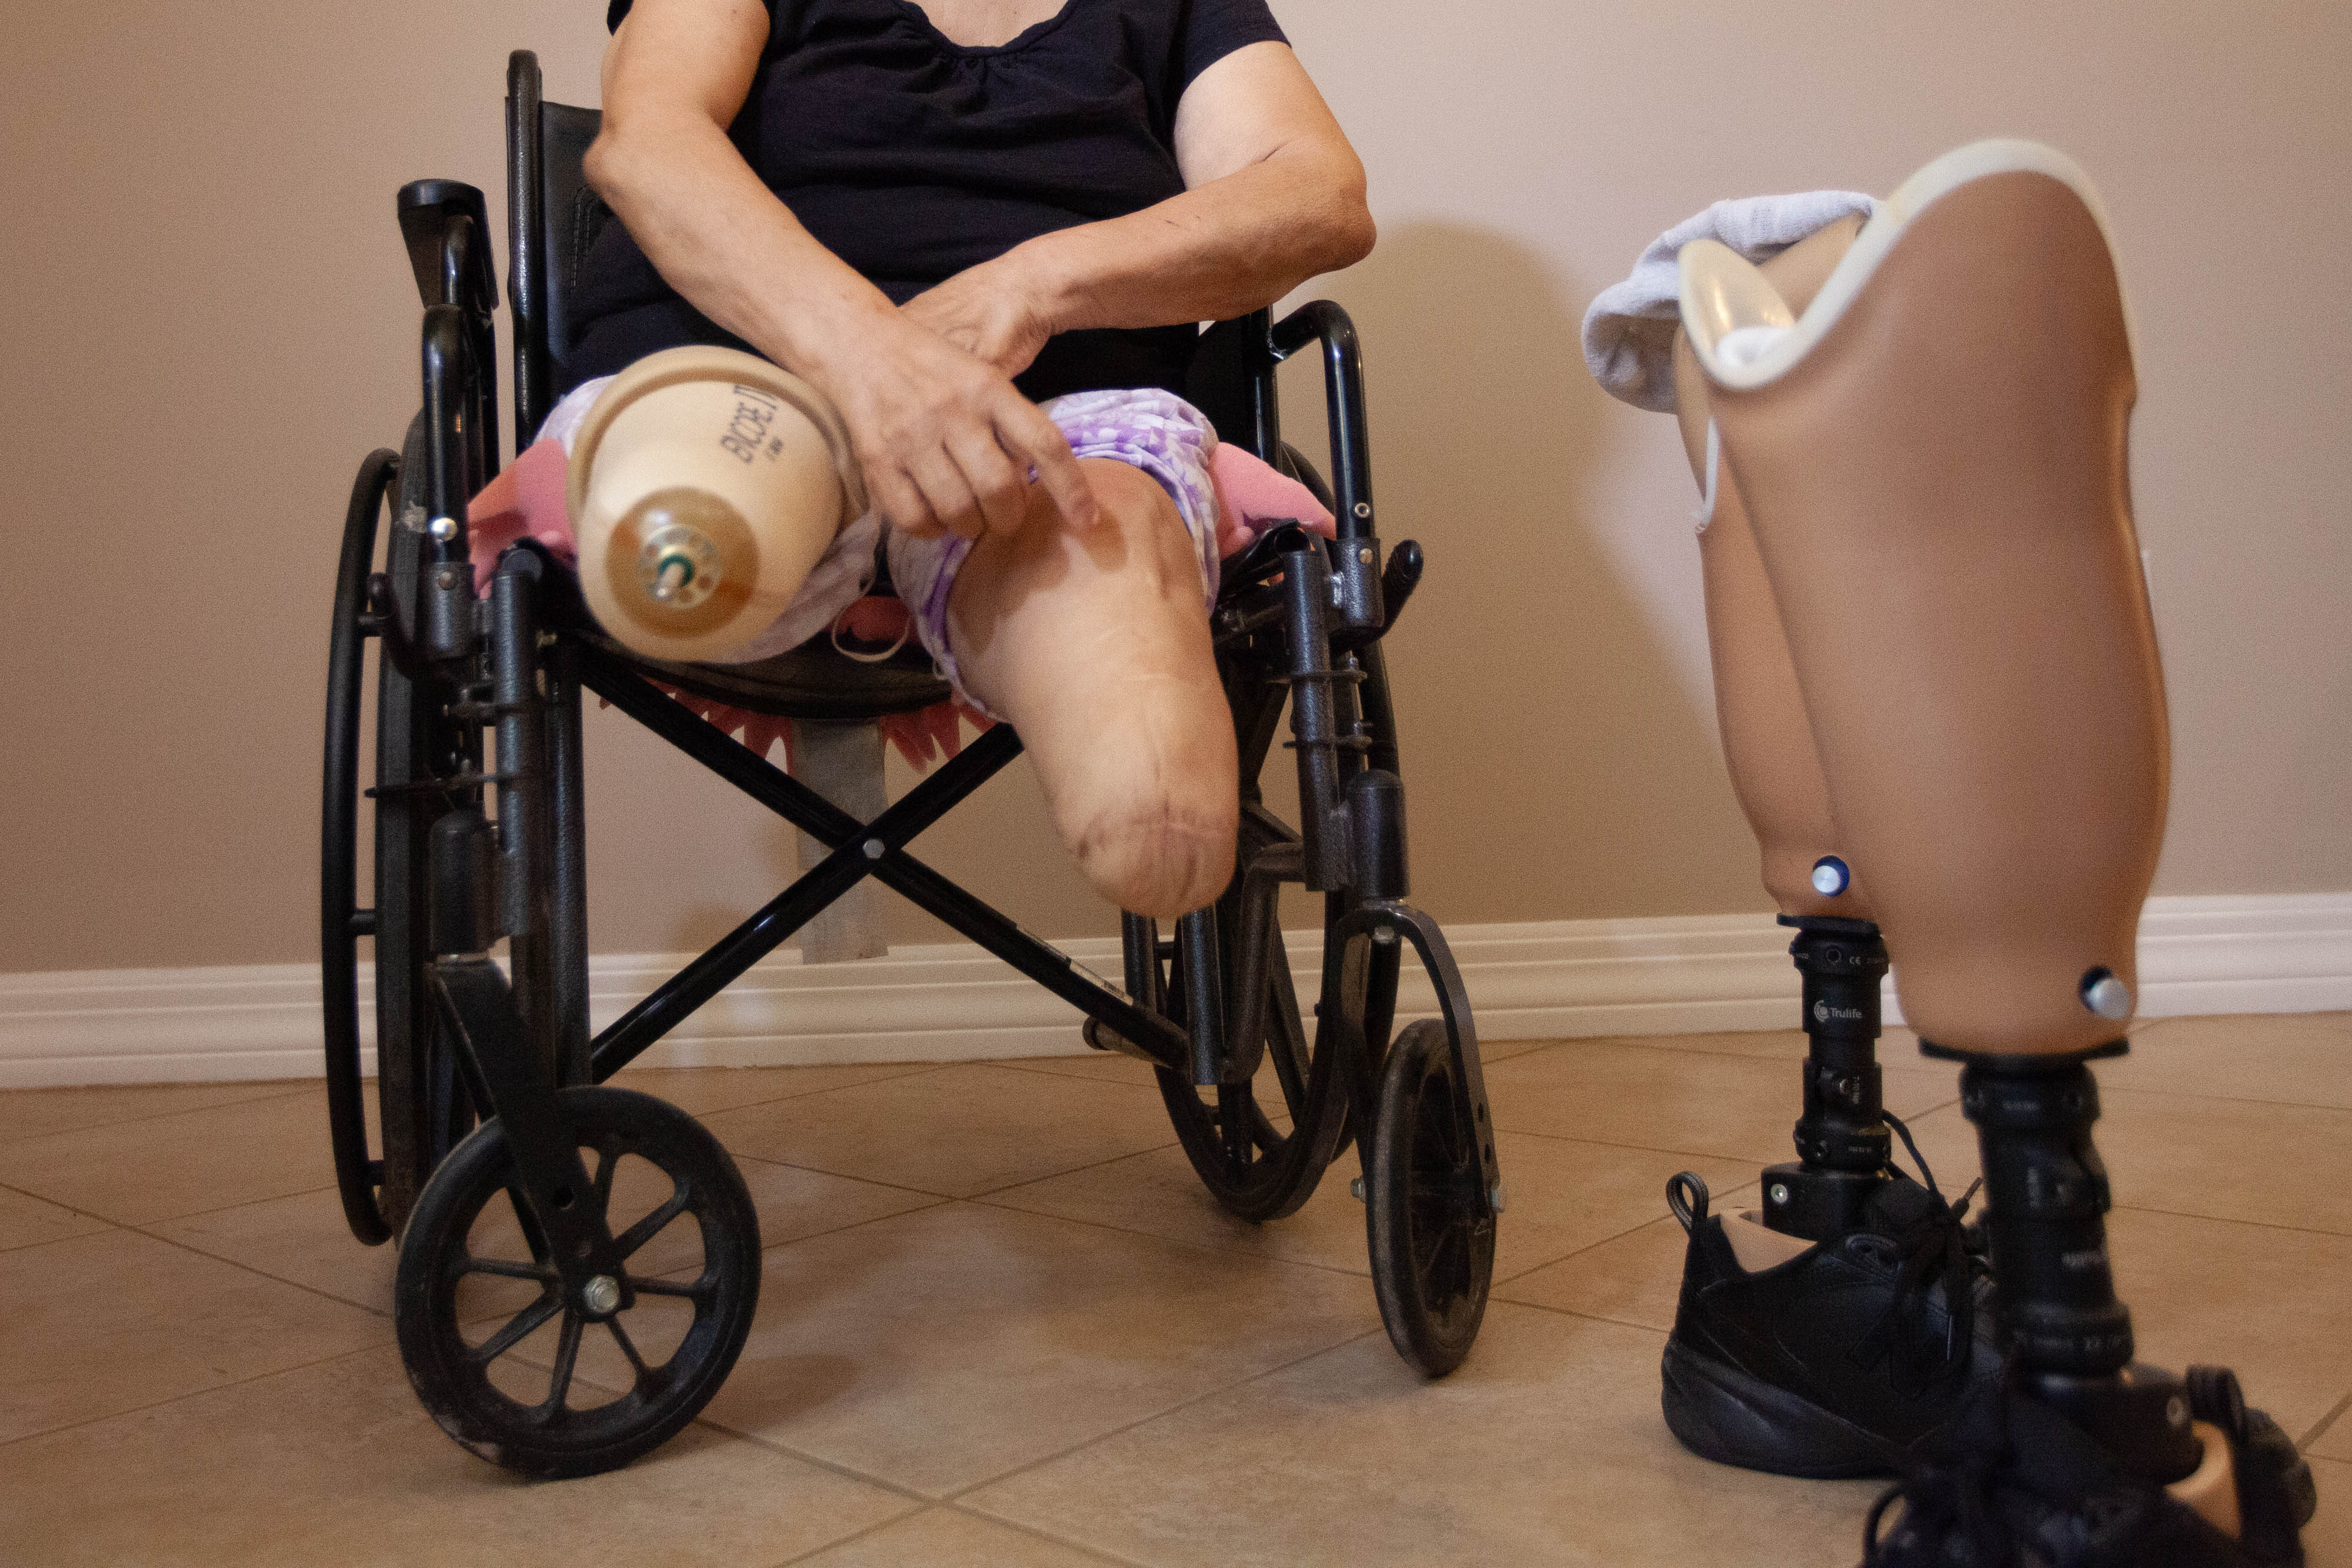 Victoria Garcia, 66, lost both legs after procedures at Modern Vascular.